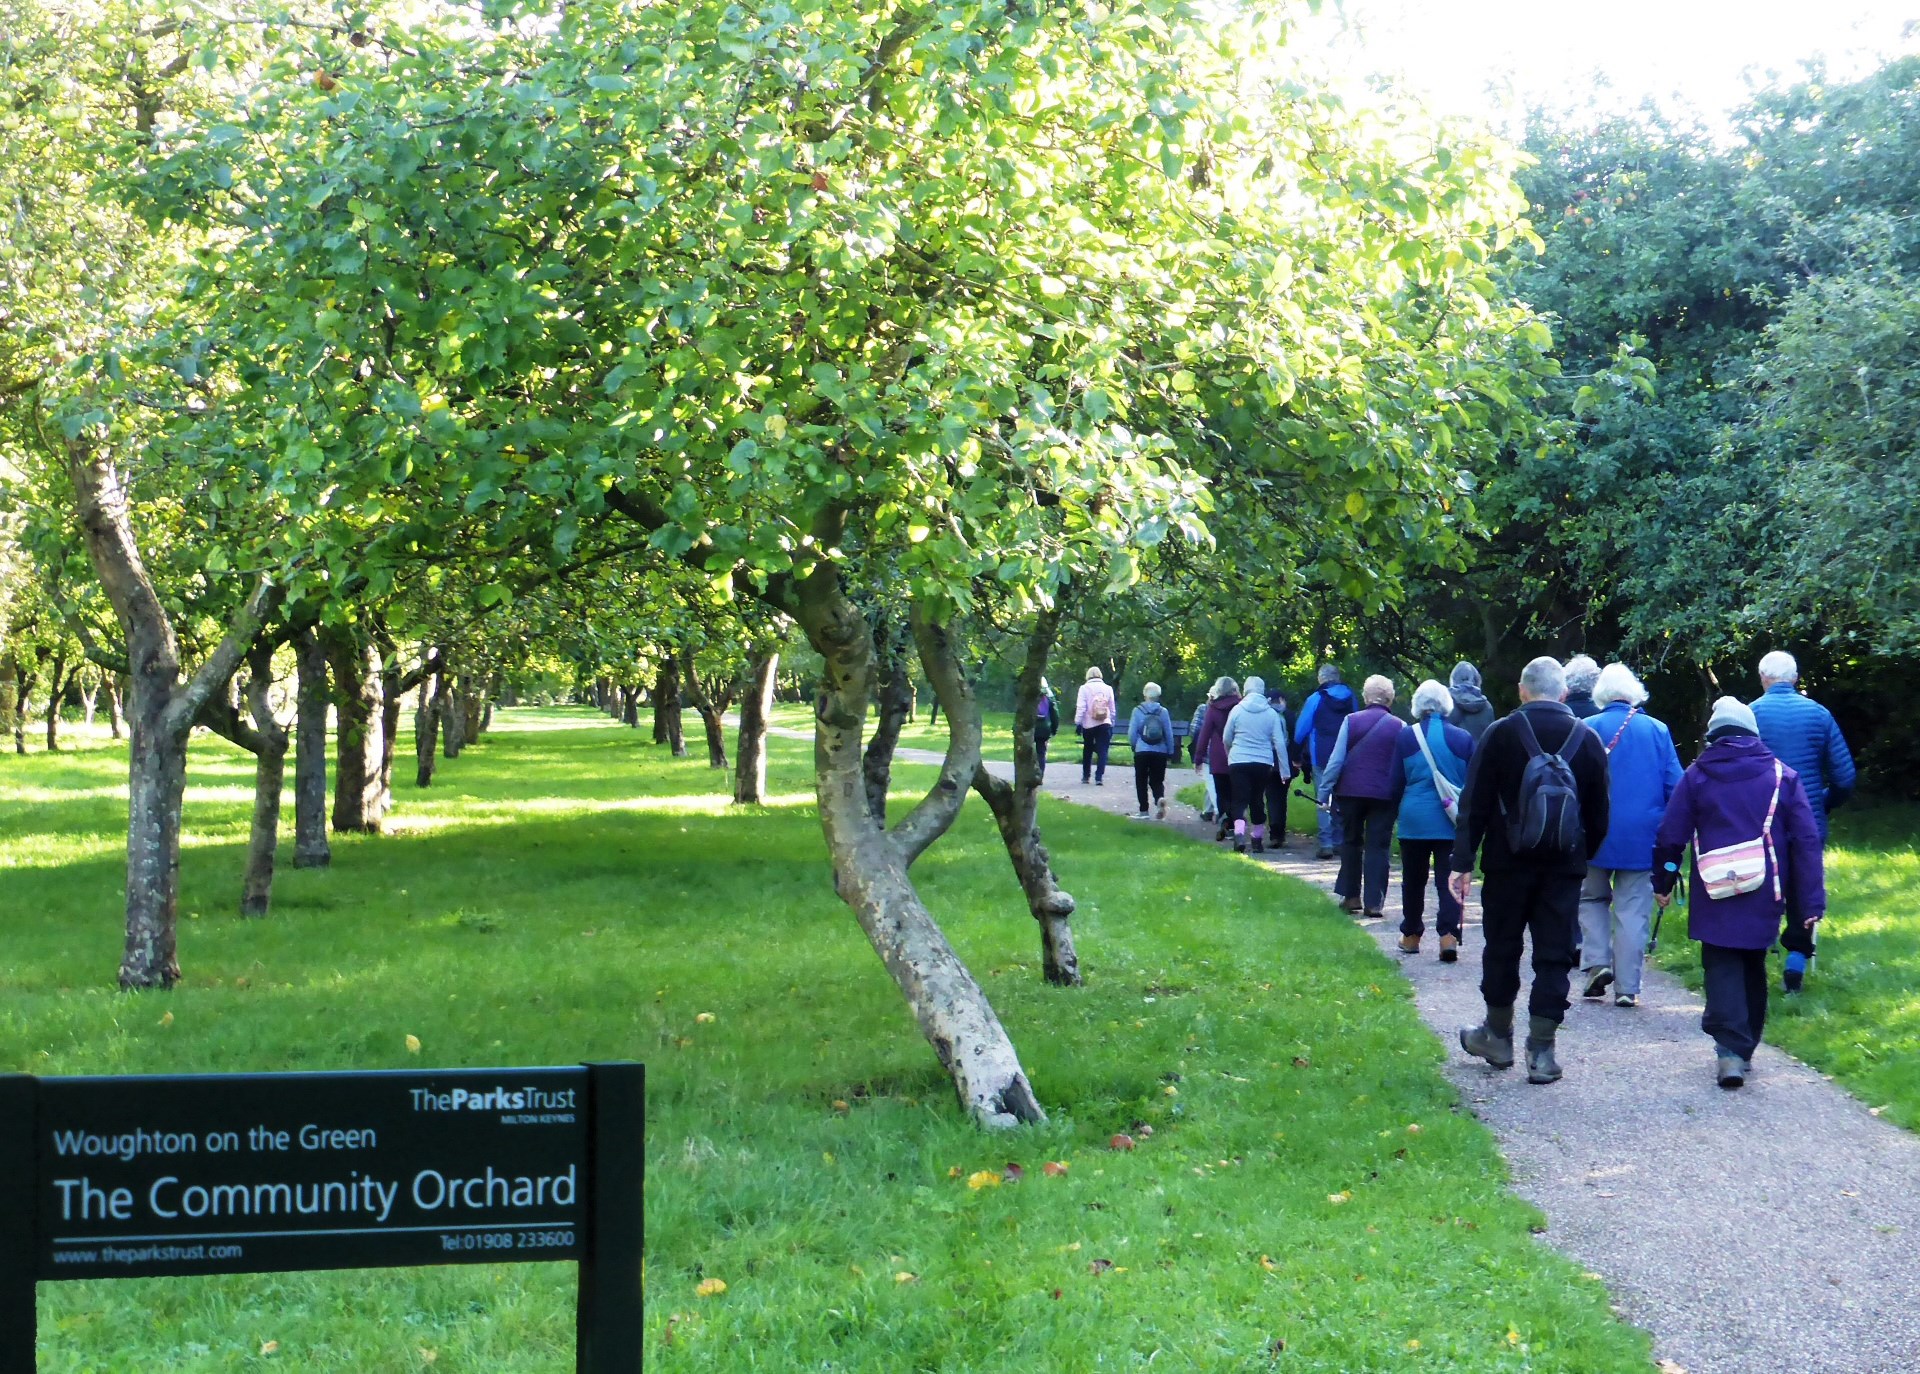 23.10 Walking through Community Orchard